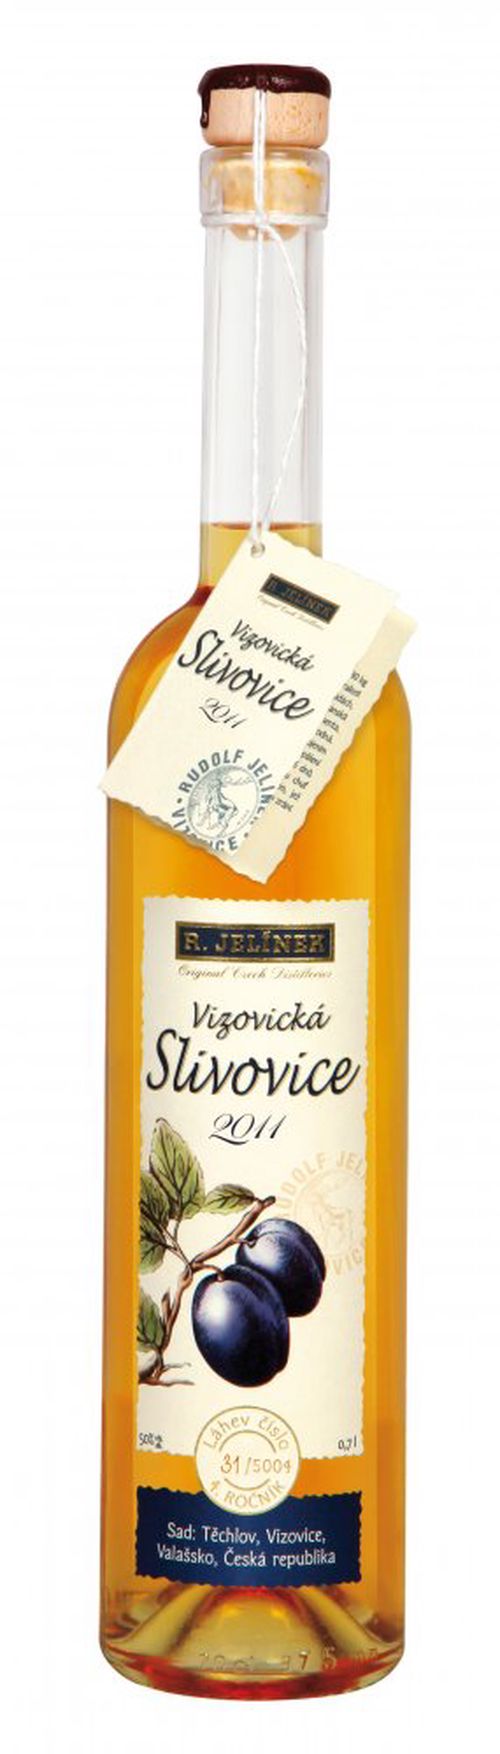 Vizovická Slivovice 2011 0,7l 50%